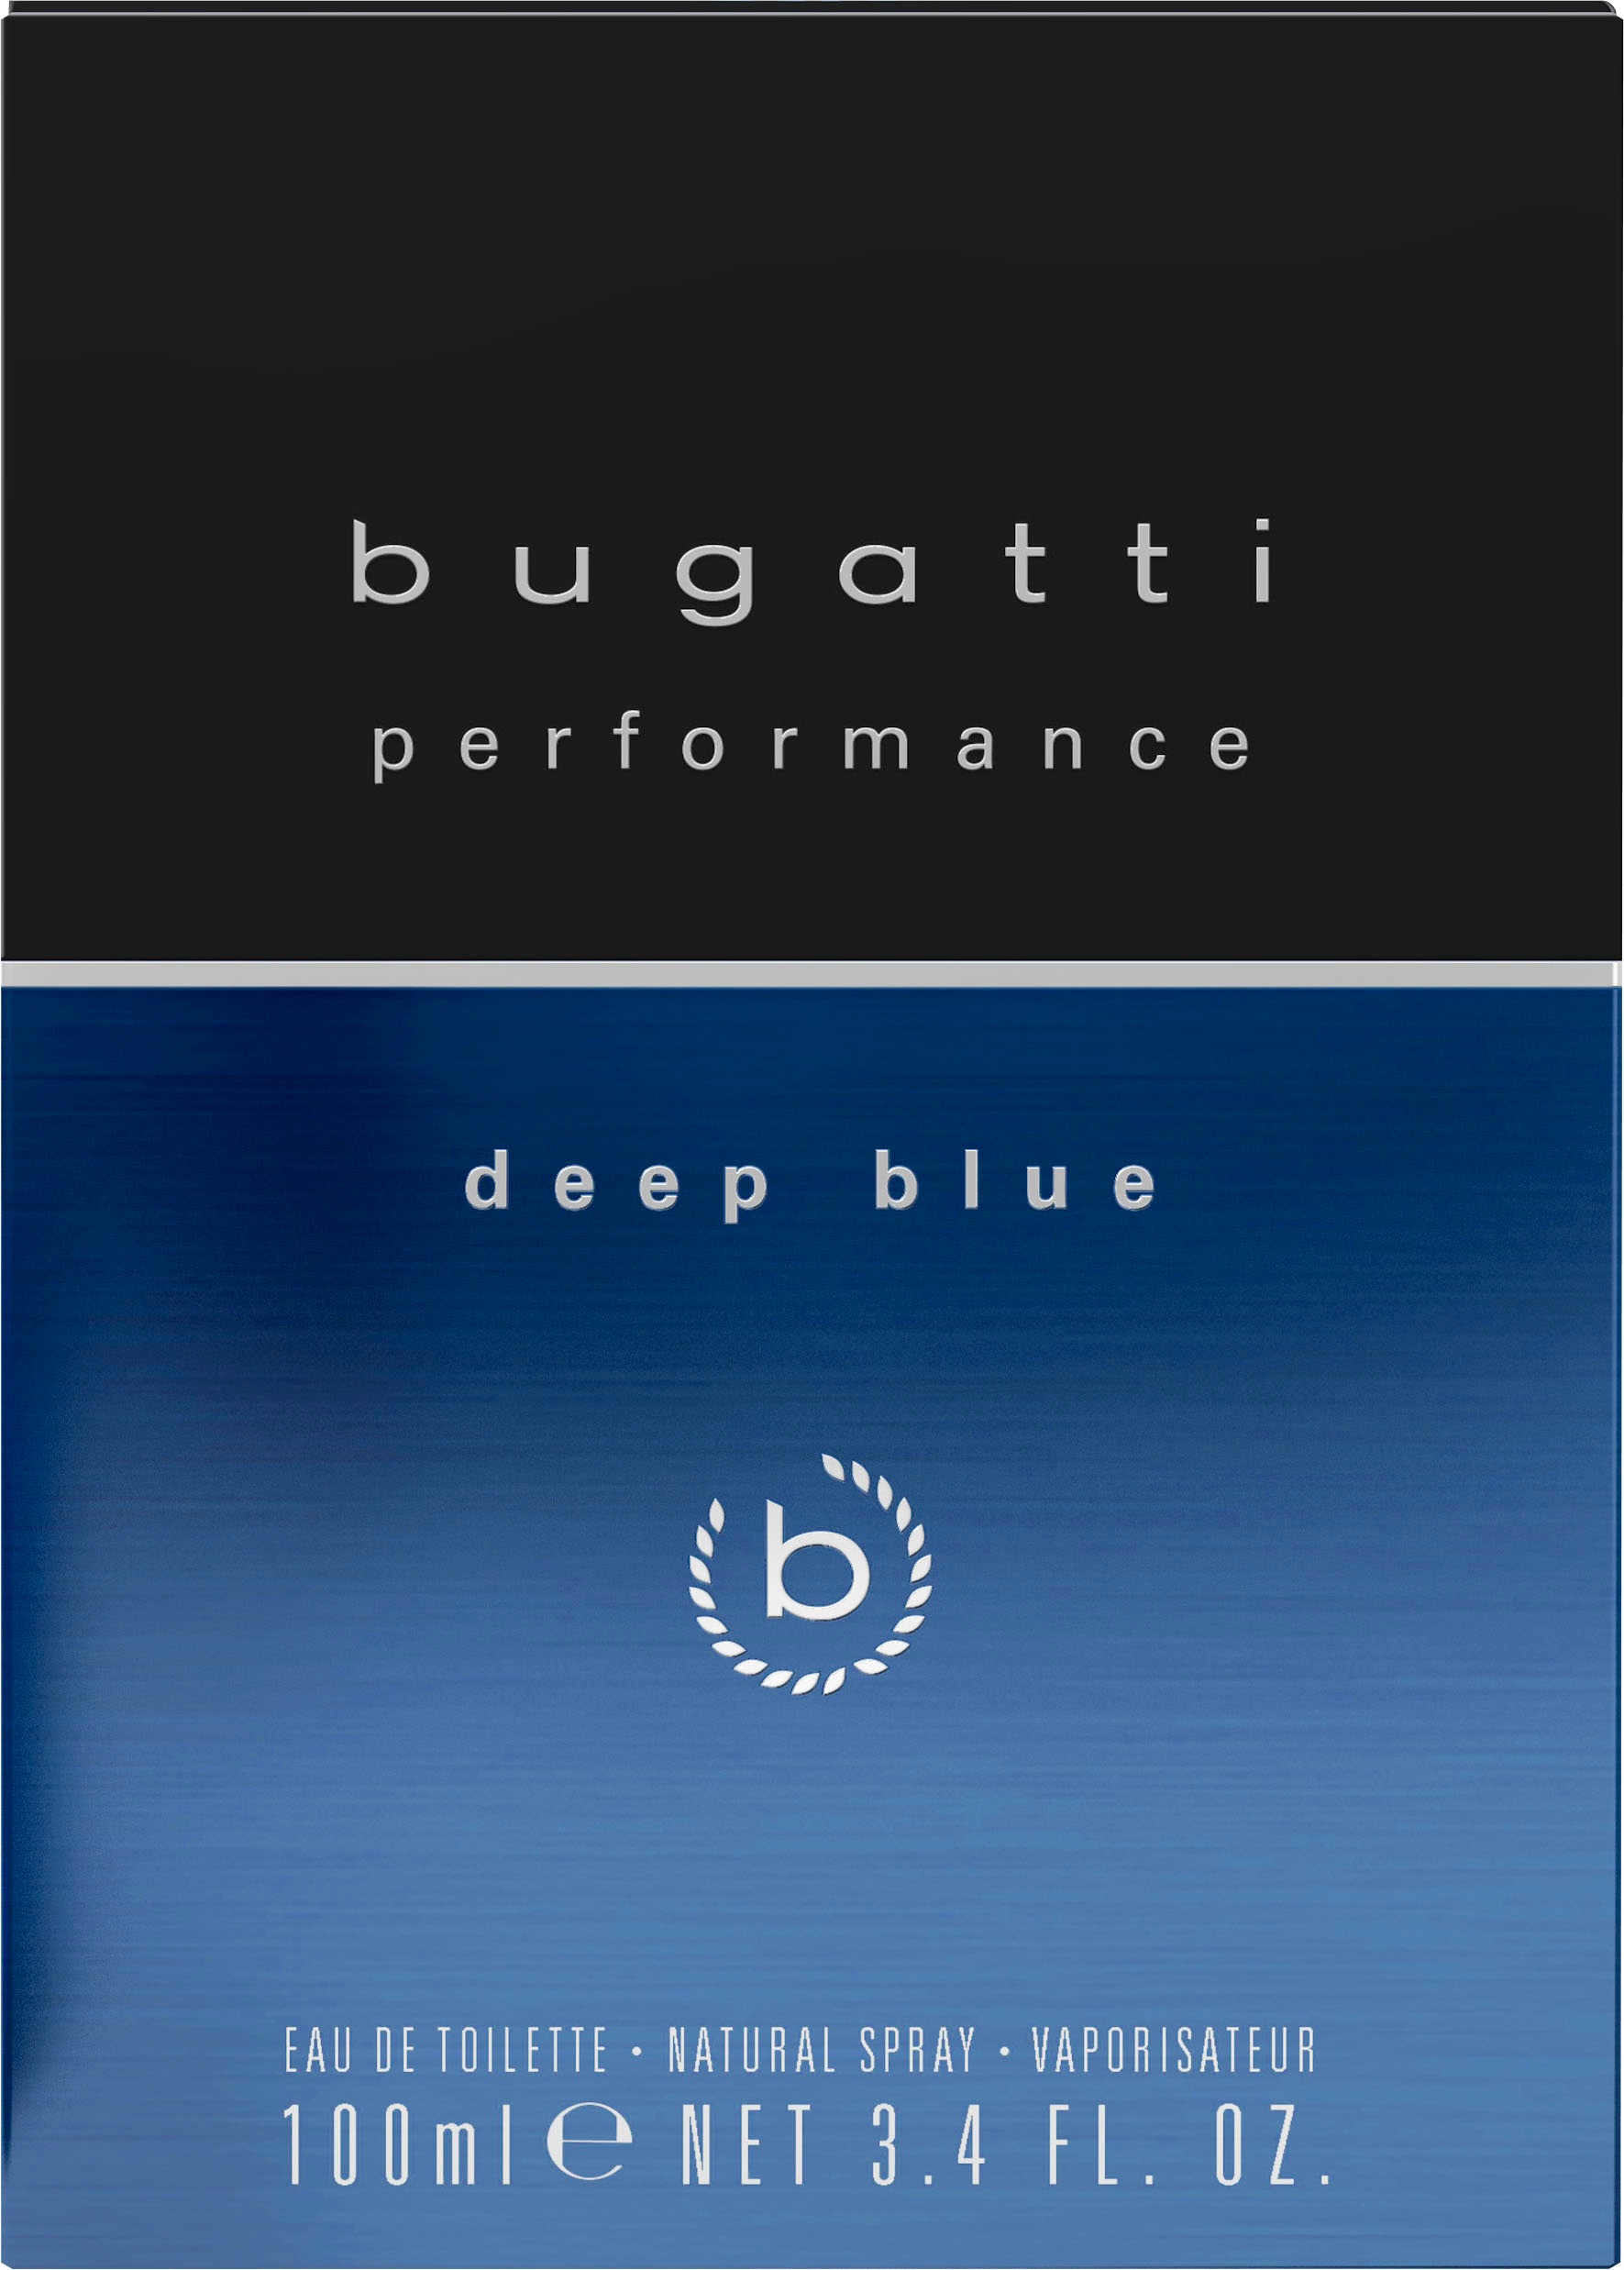 Blue bestellen de EdT Deep OTTO Performance bei 100ml« Toilette »BUGATTI Eau bugatti